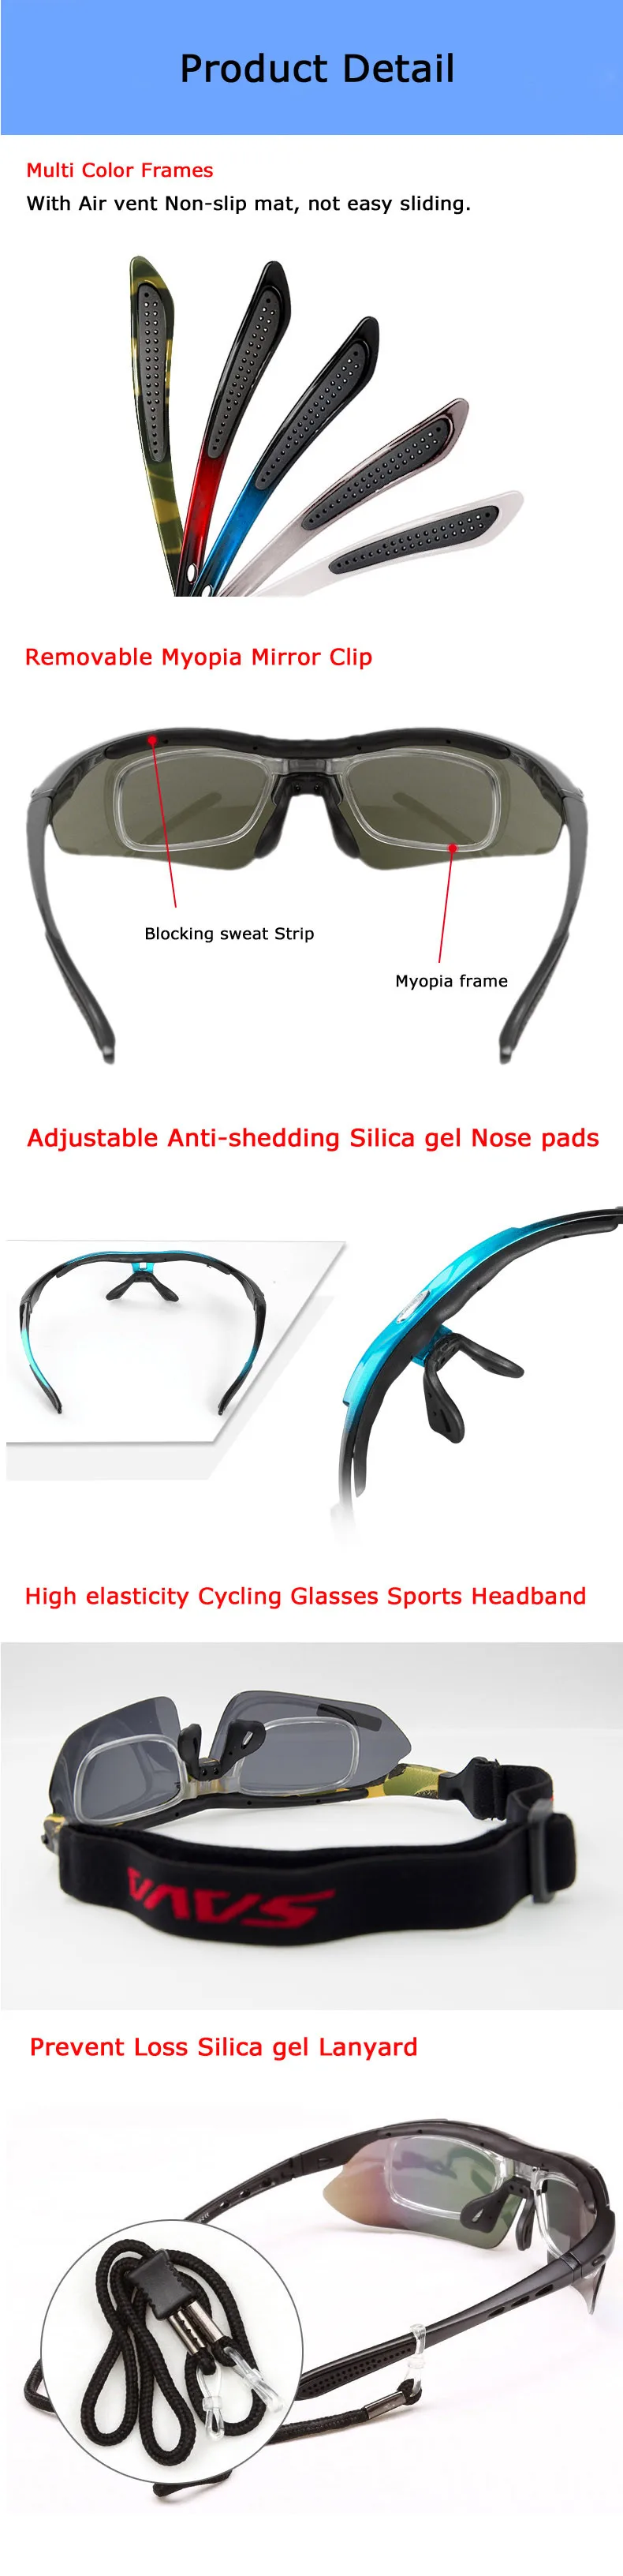 Cycling Glasses -6